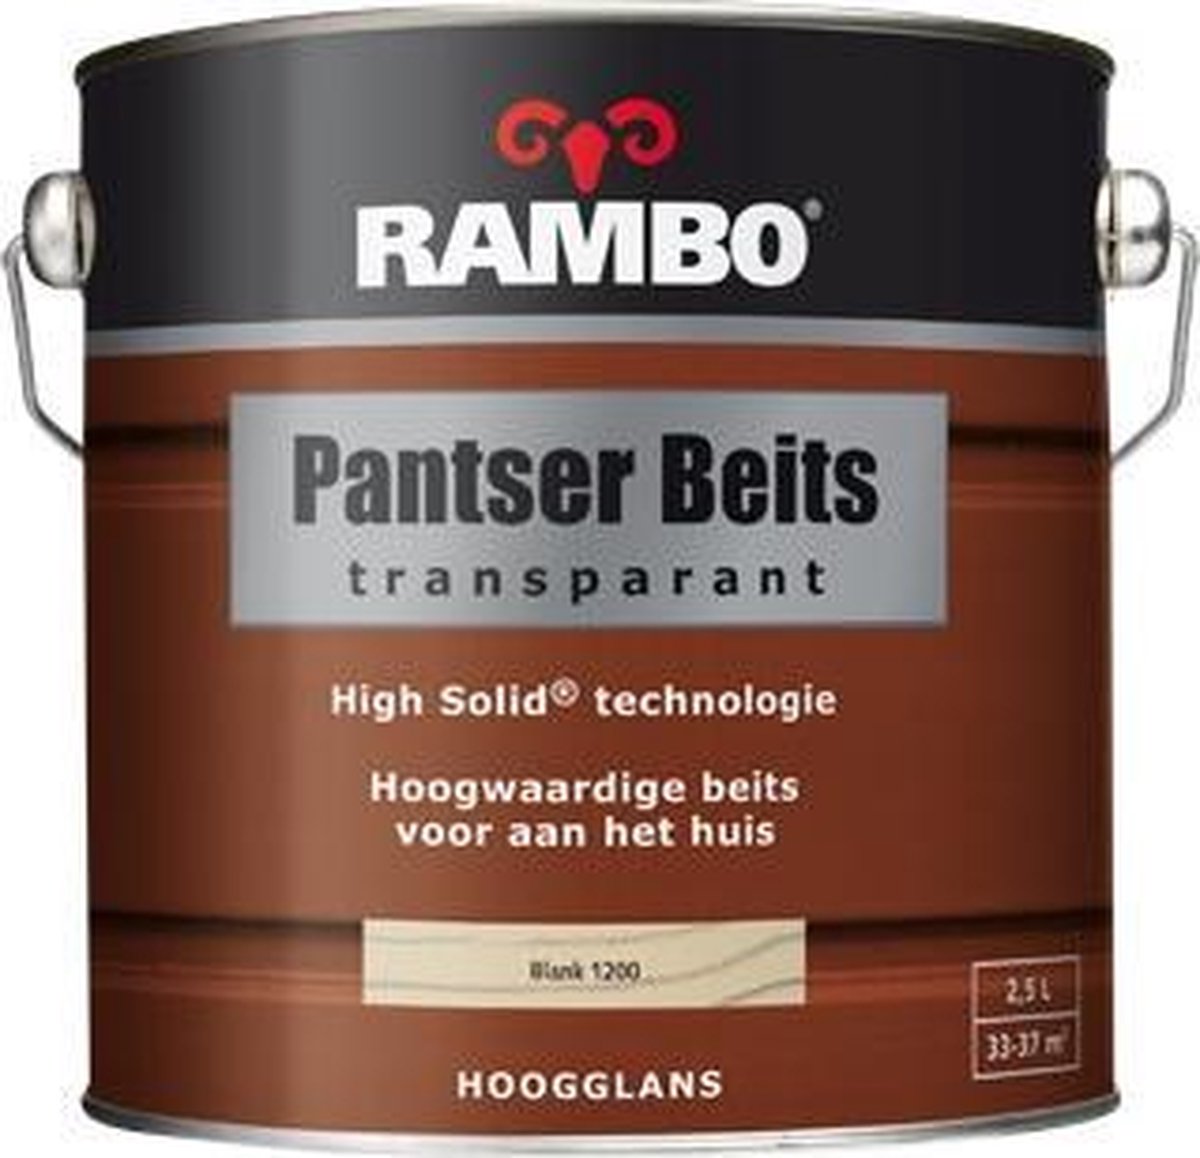 8716242720317 UPC Rambo Pantser Beits Transparant - 2, 5 Liter - Blank